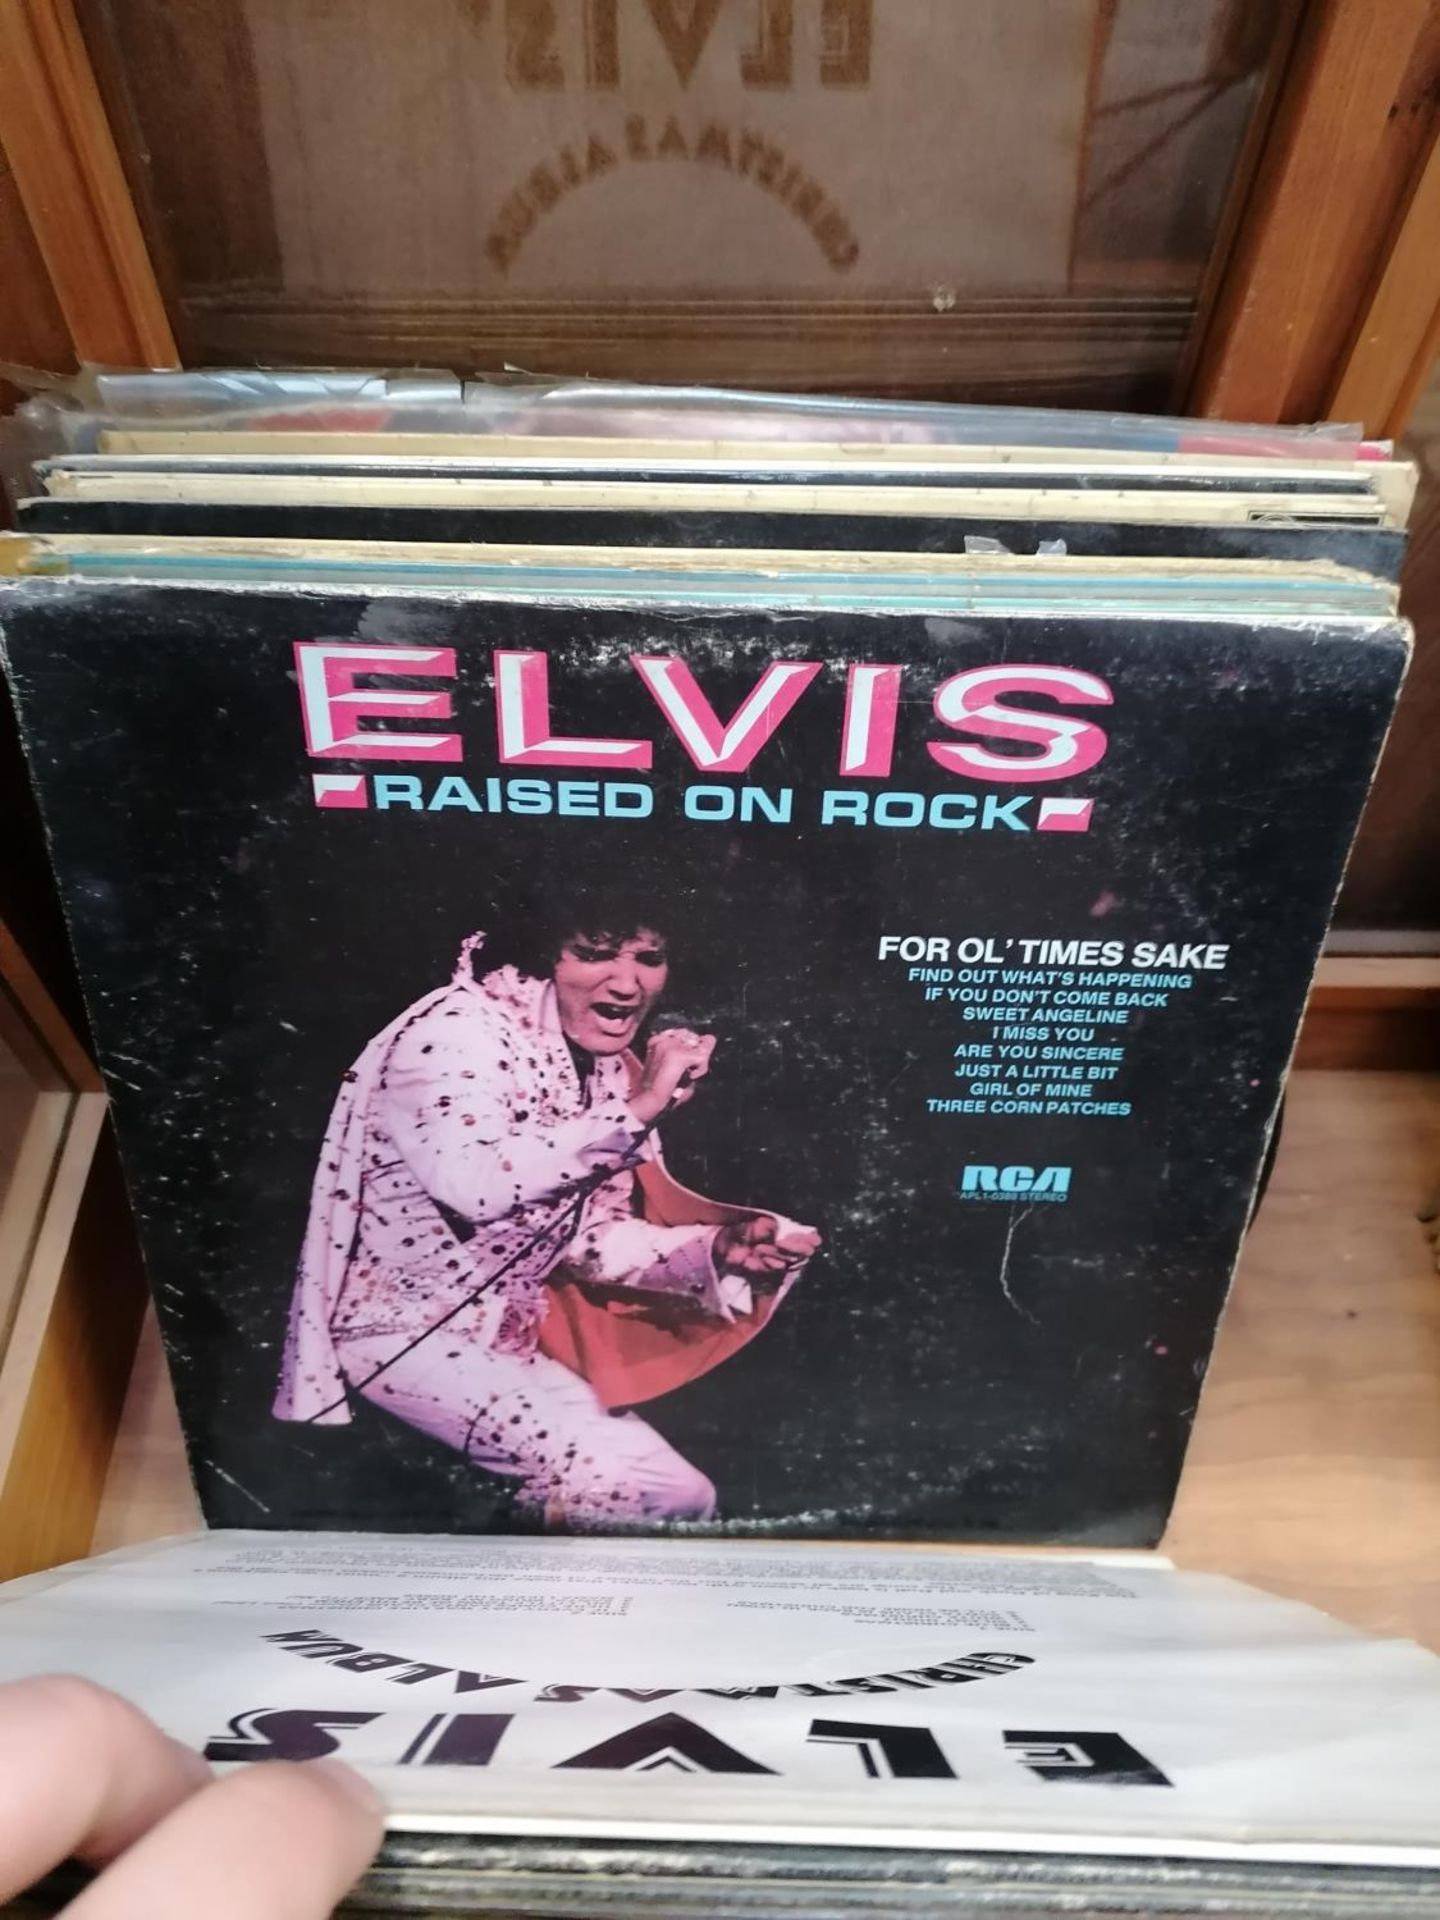 TWENTY TWO ASSORTED ELVIS LP VINYL RECORDS - Image 2 of 3